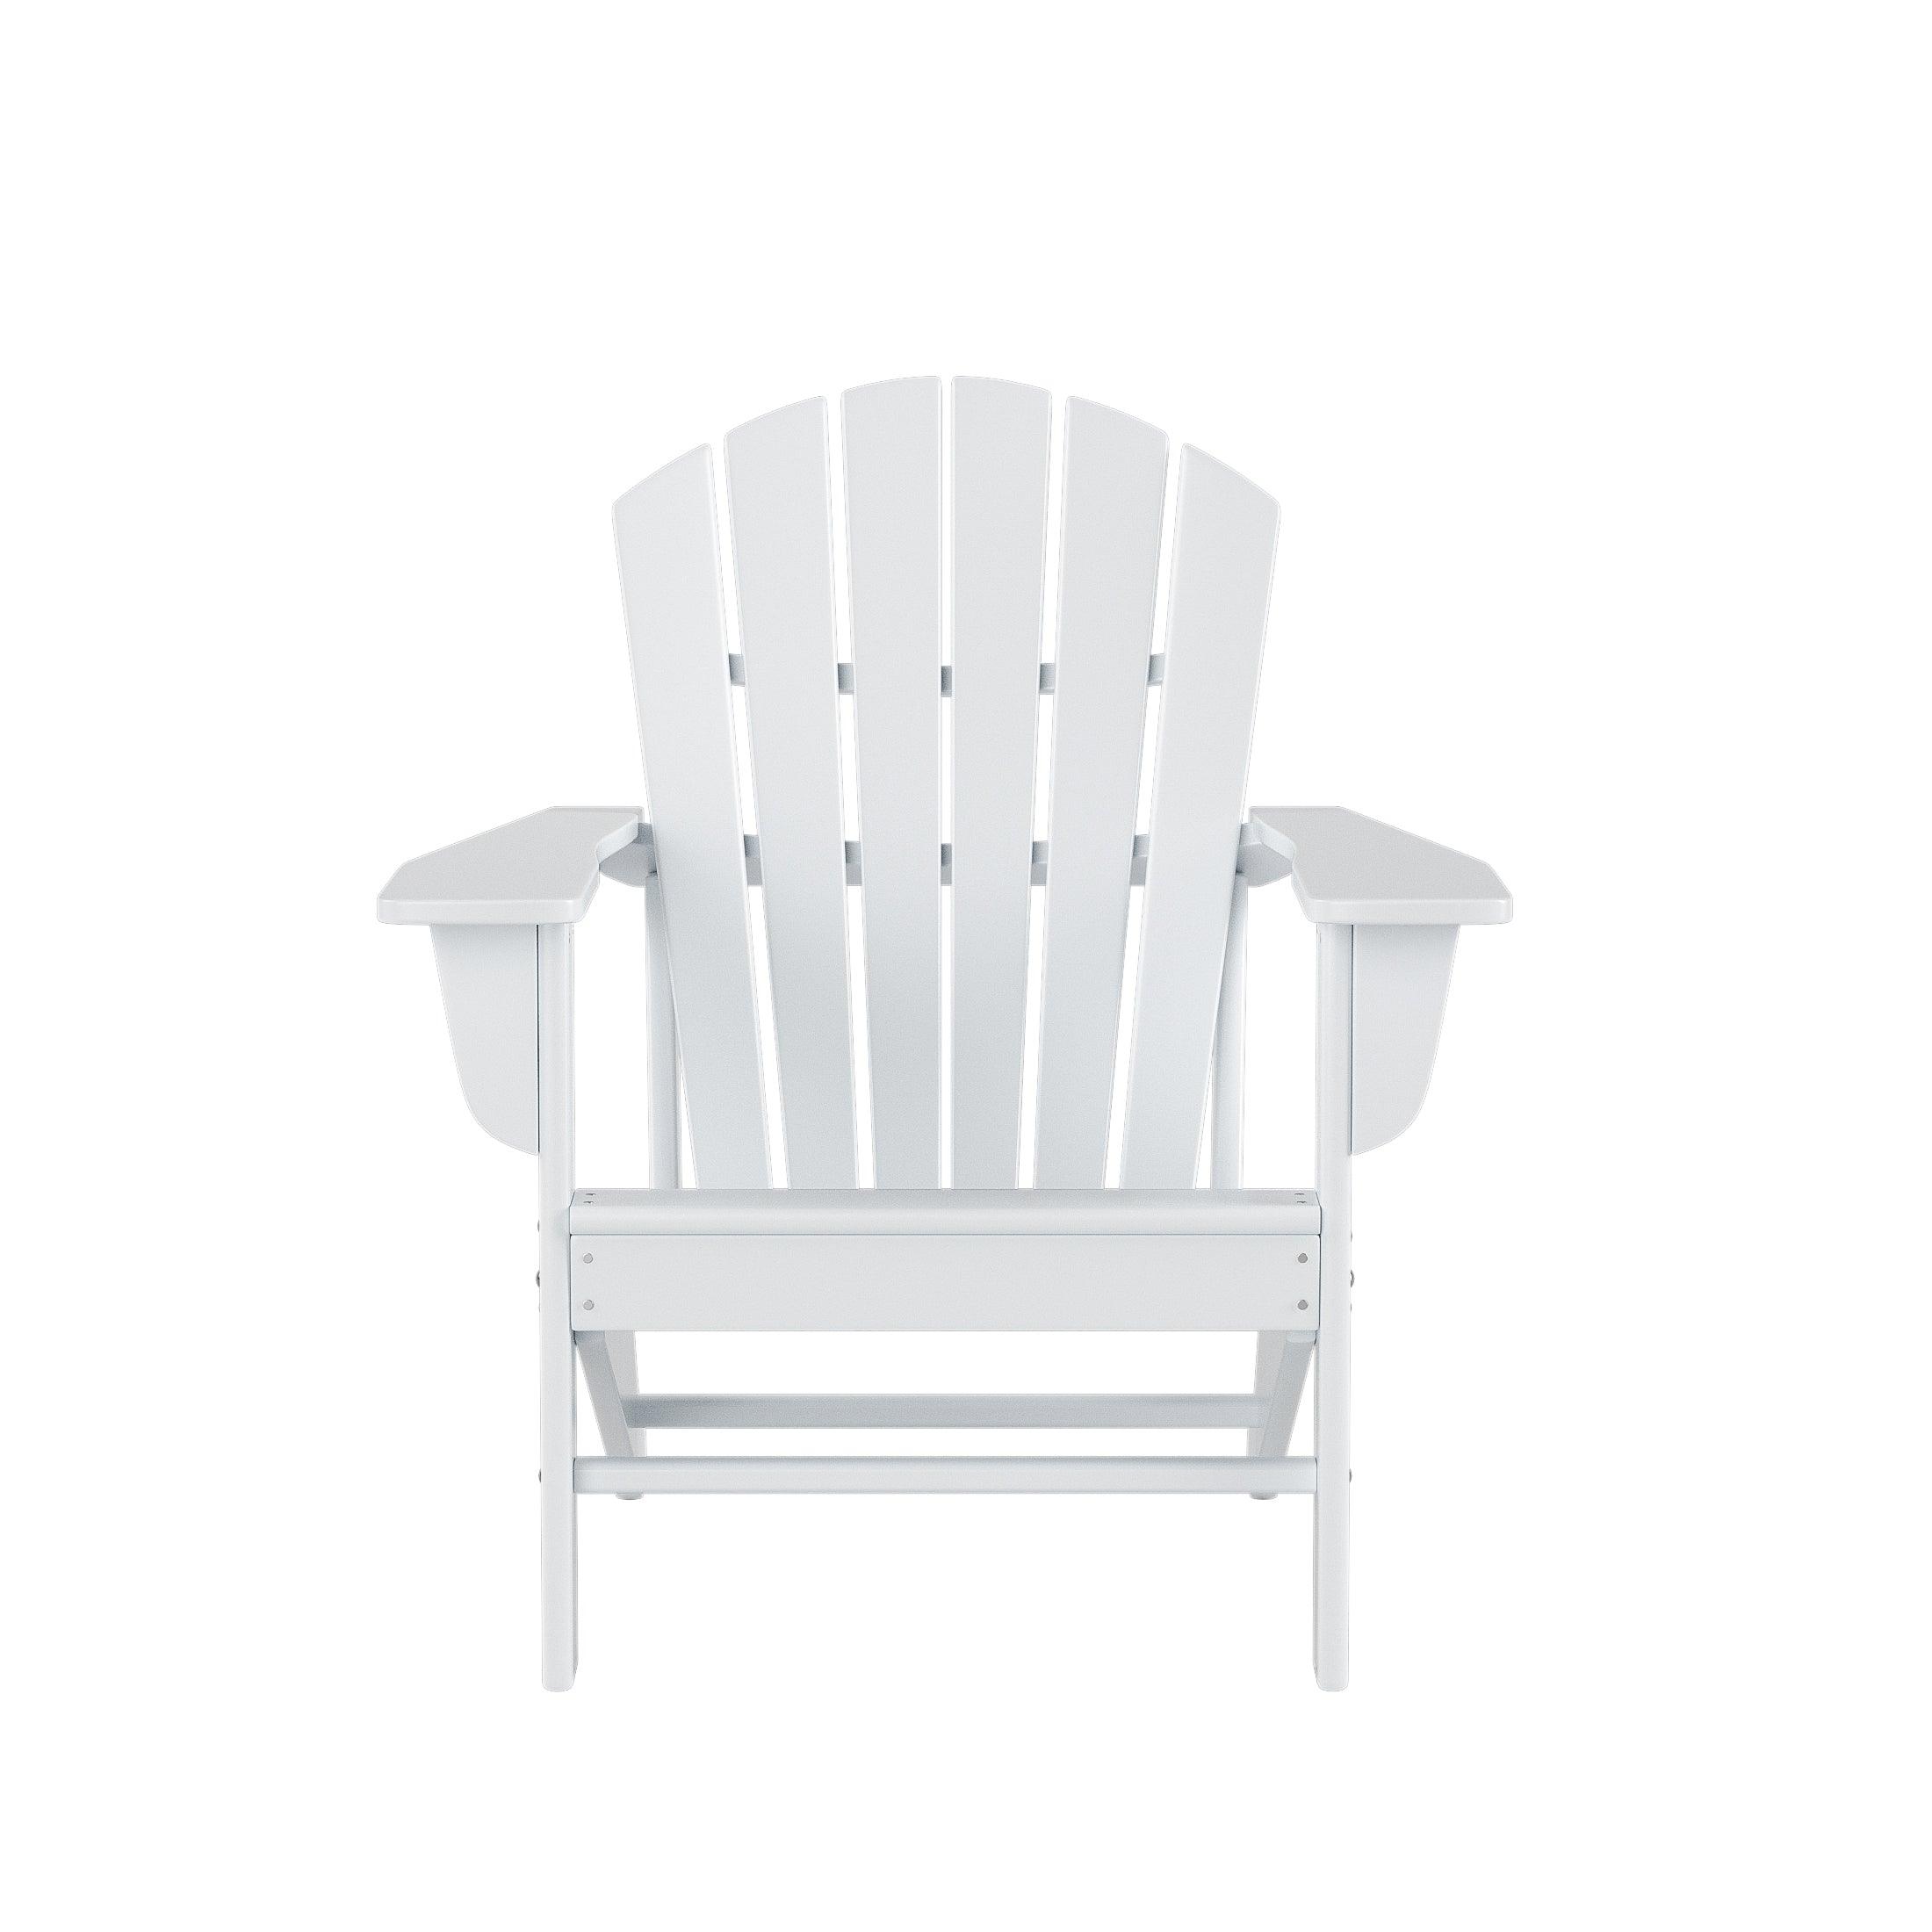 Portside Classic Outdoor Adirondack Chair (Set of 8) - Costaelm